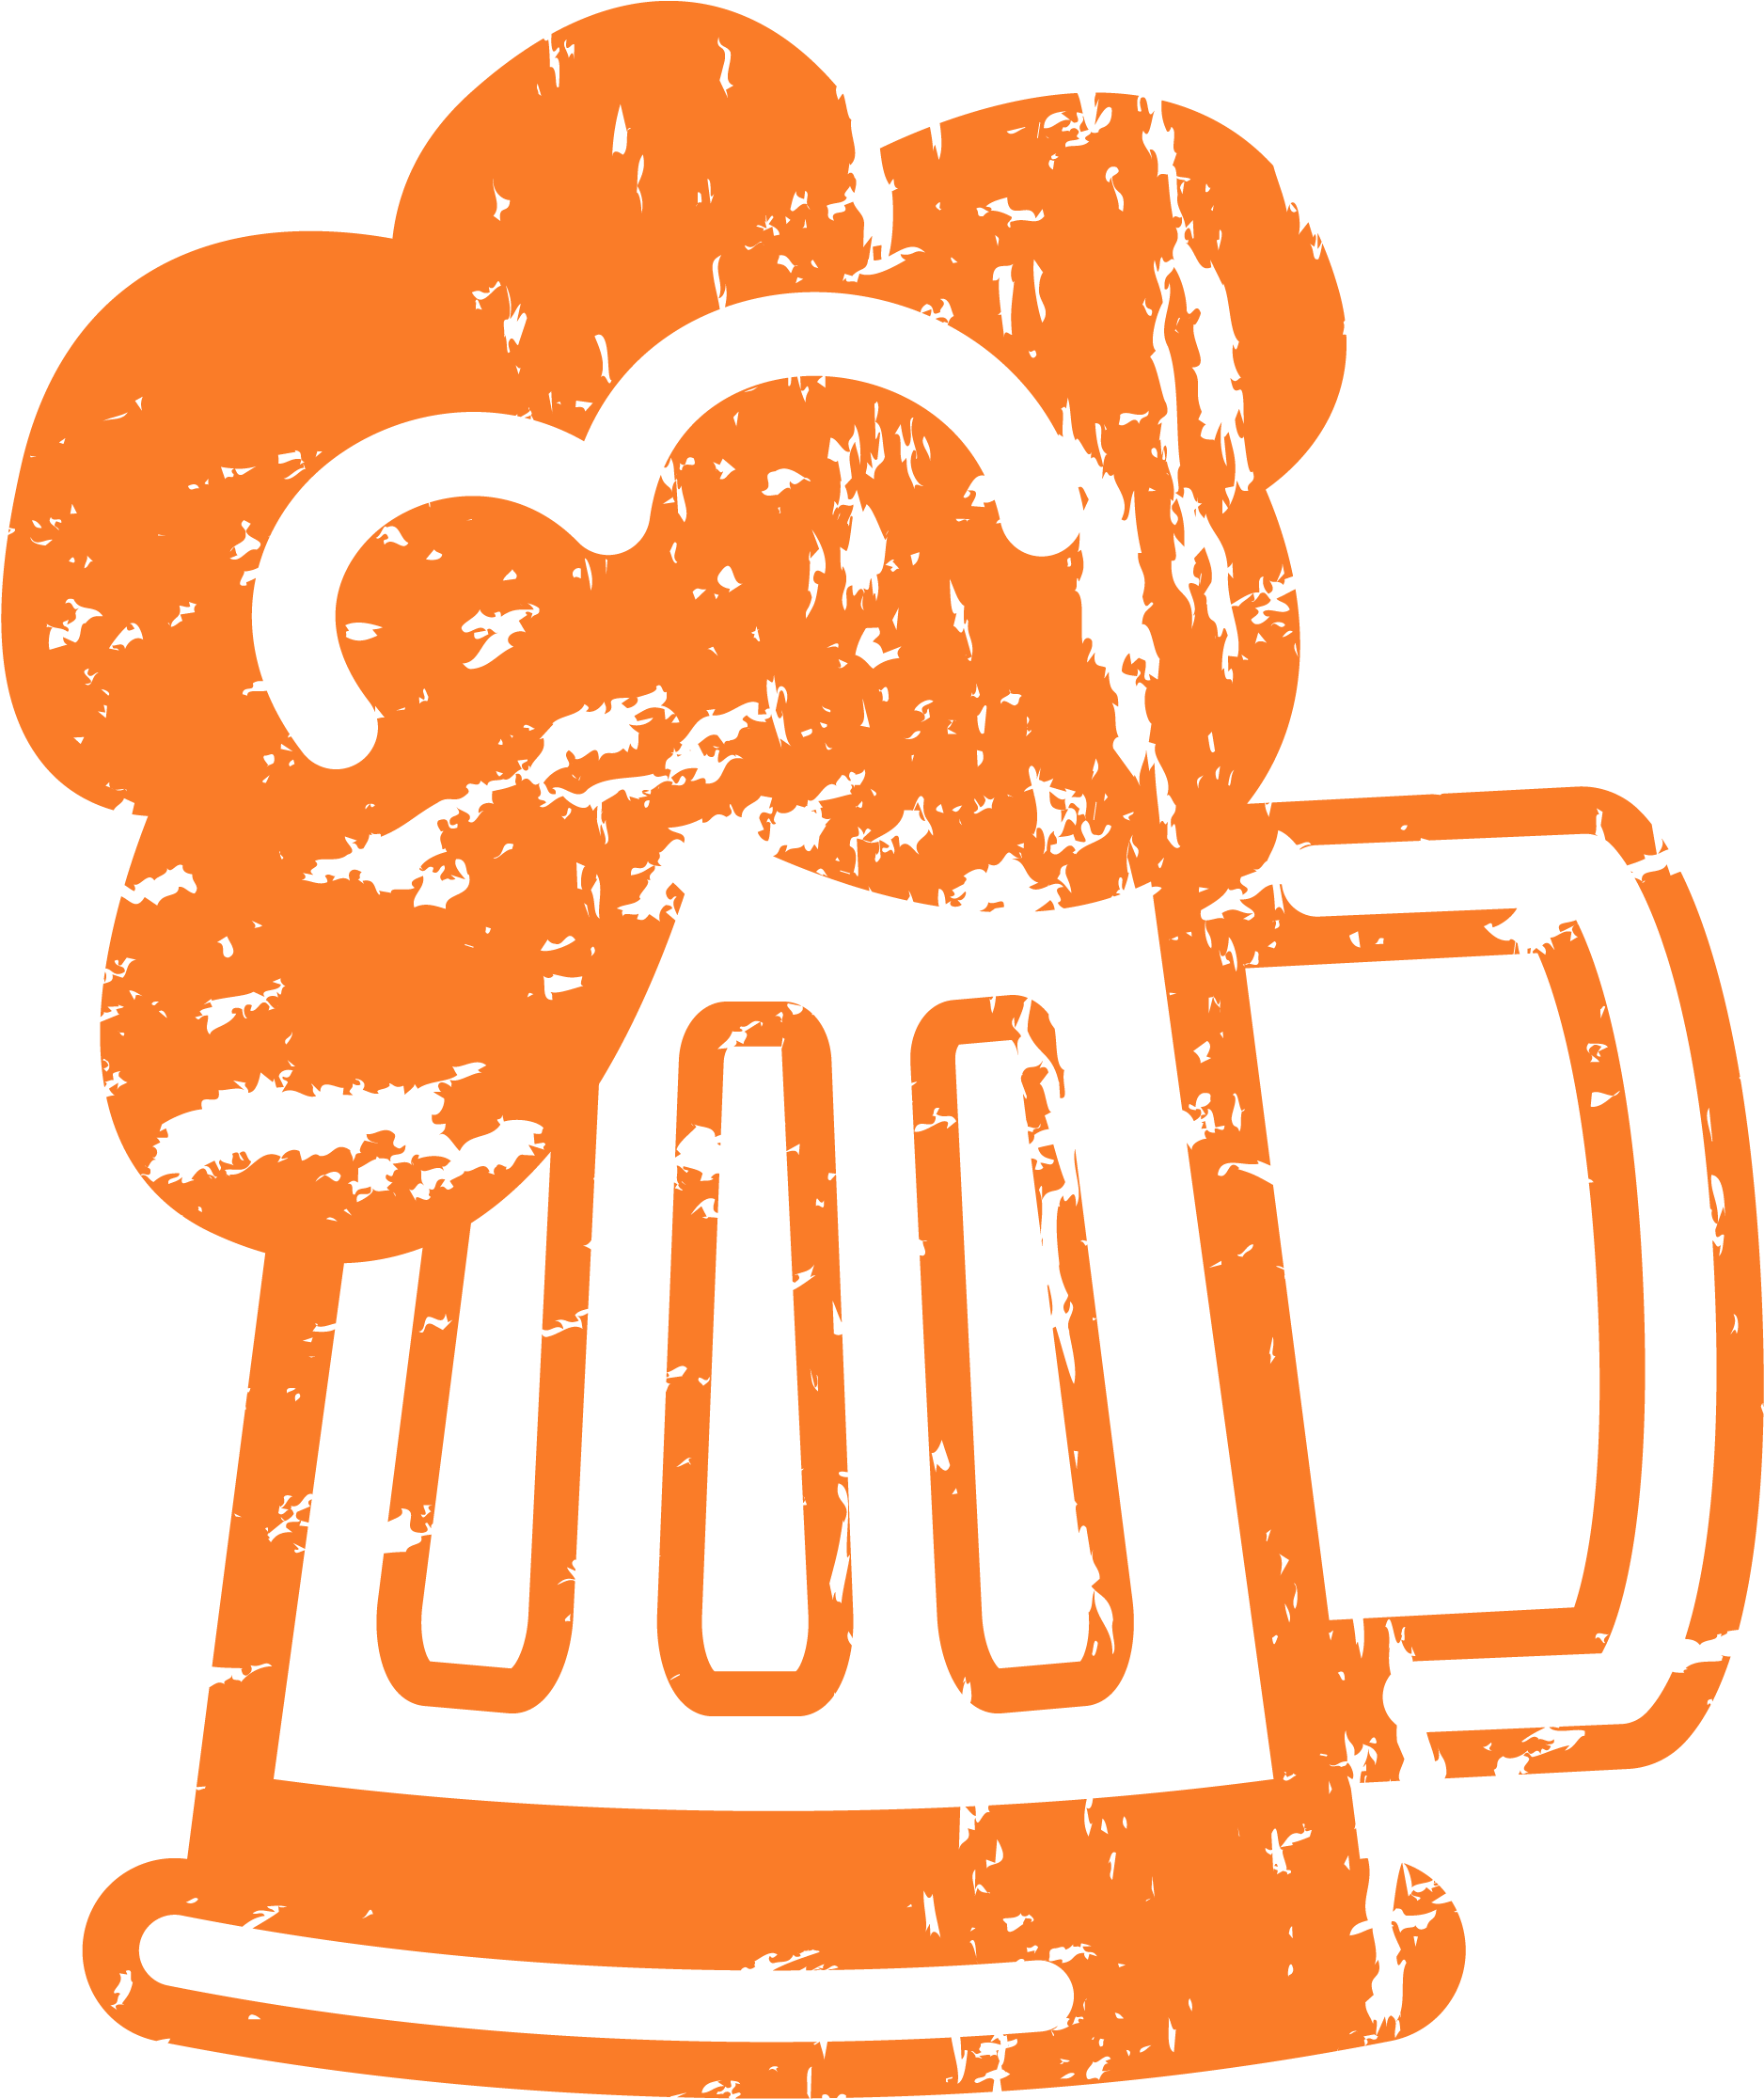 Beer Text With Cartoon Beer Mug B4000 13 - Beer Cartoon Png (4000x4000), Png Download